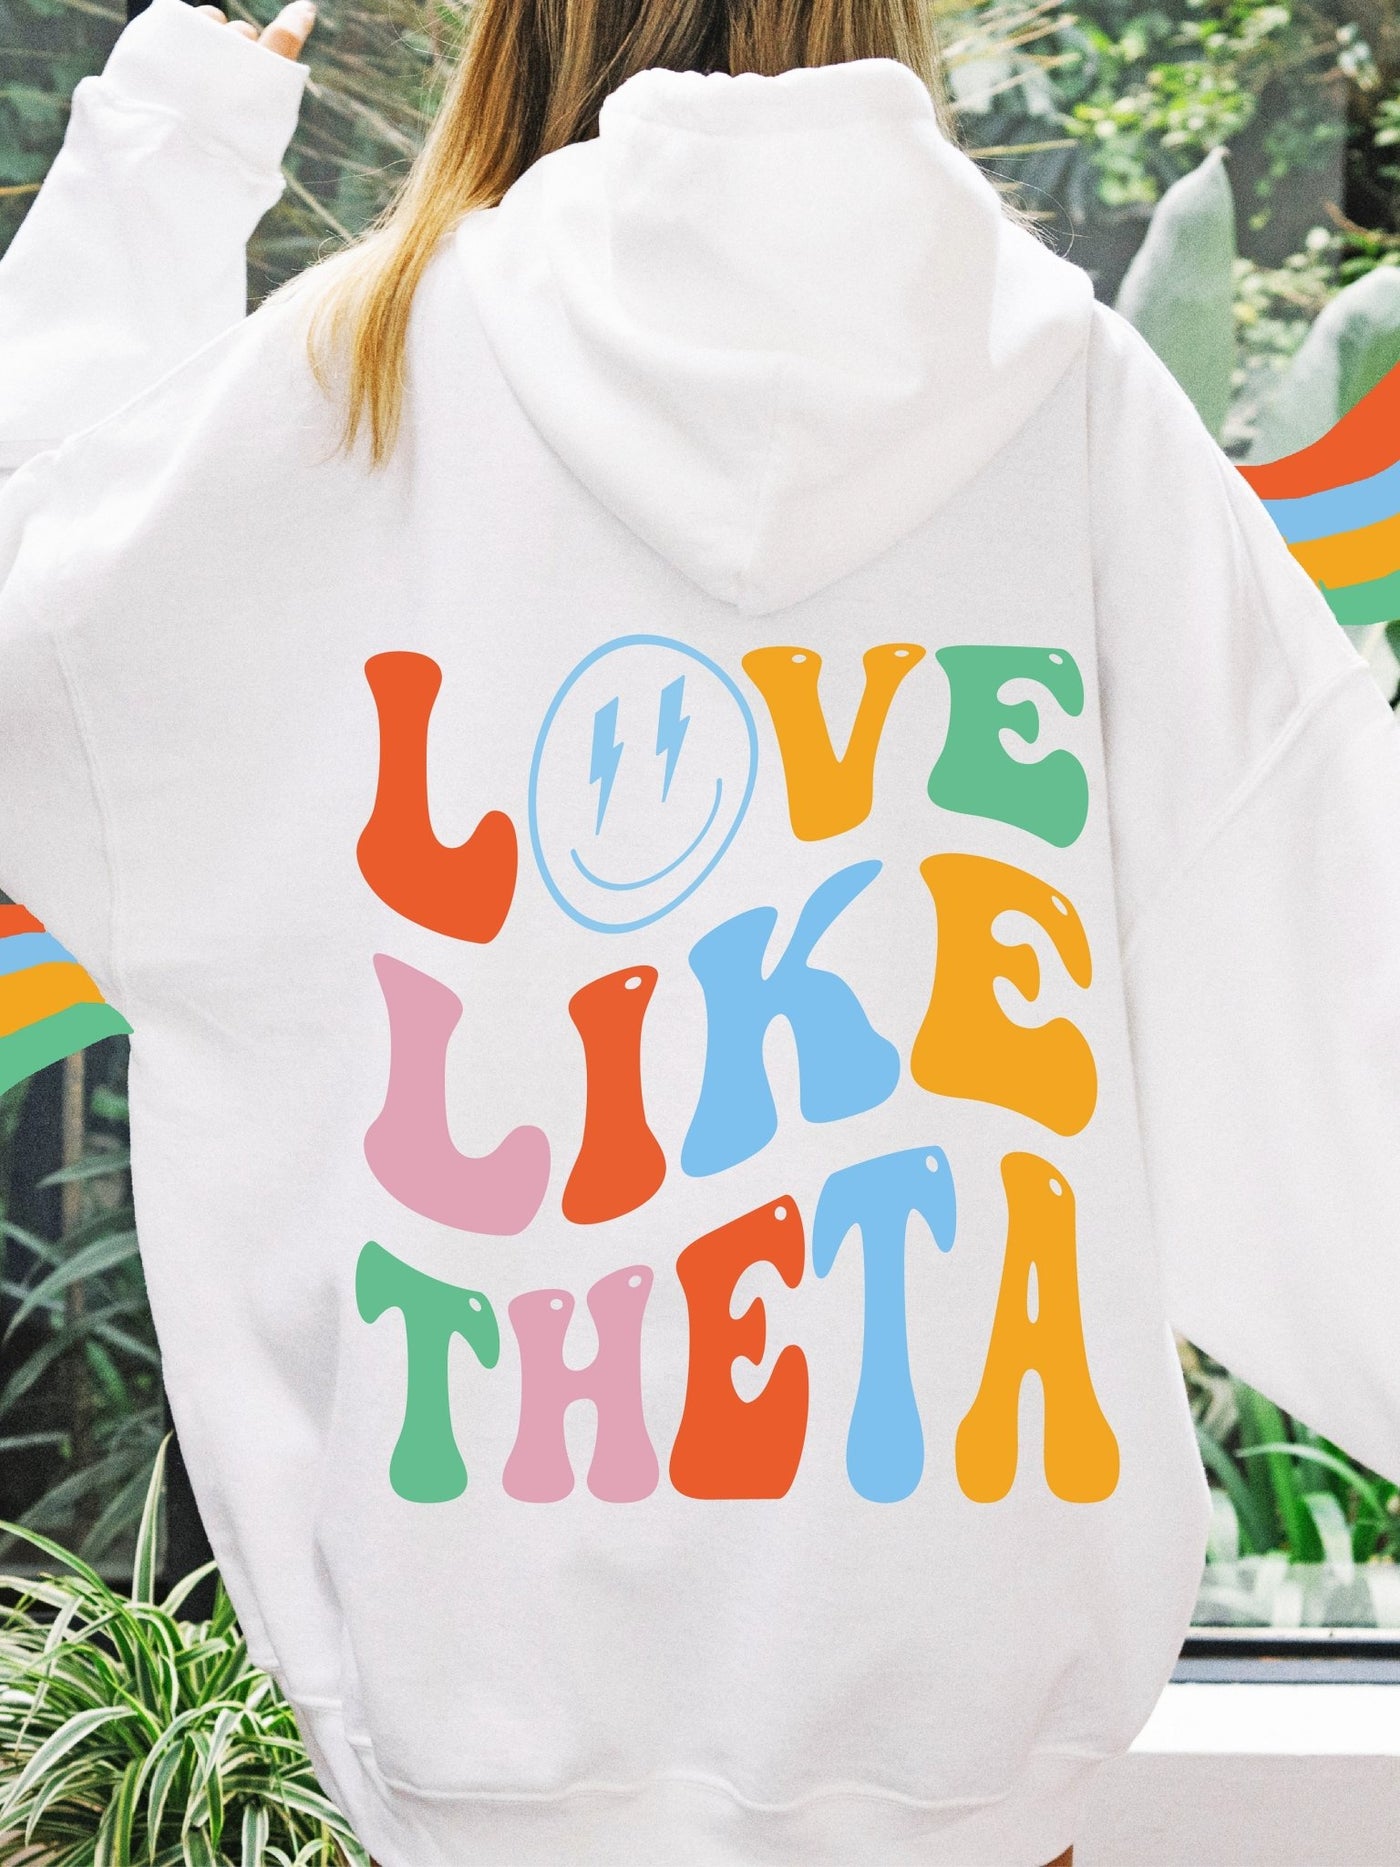 Kappa Alpha Theta Soft Sorority Sweatshirt | Love Like Theta Sorority Hoodie